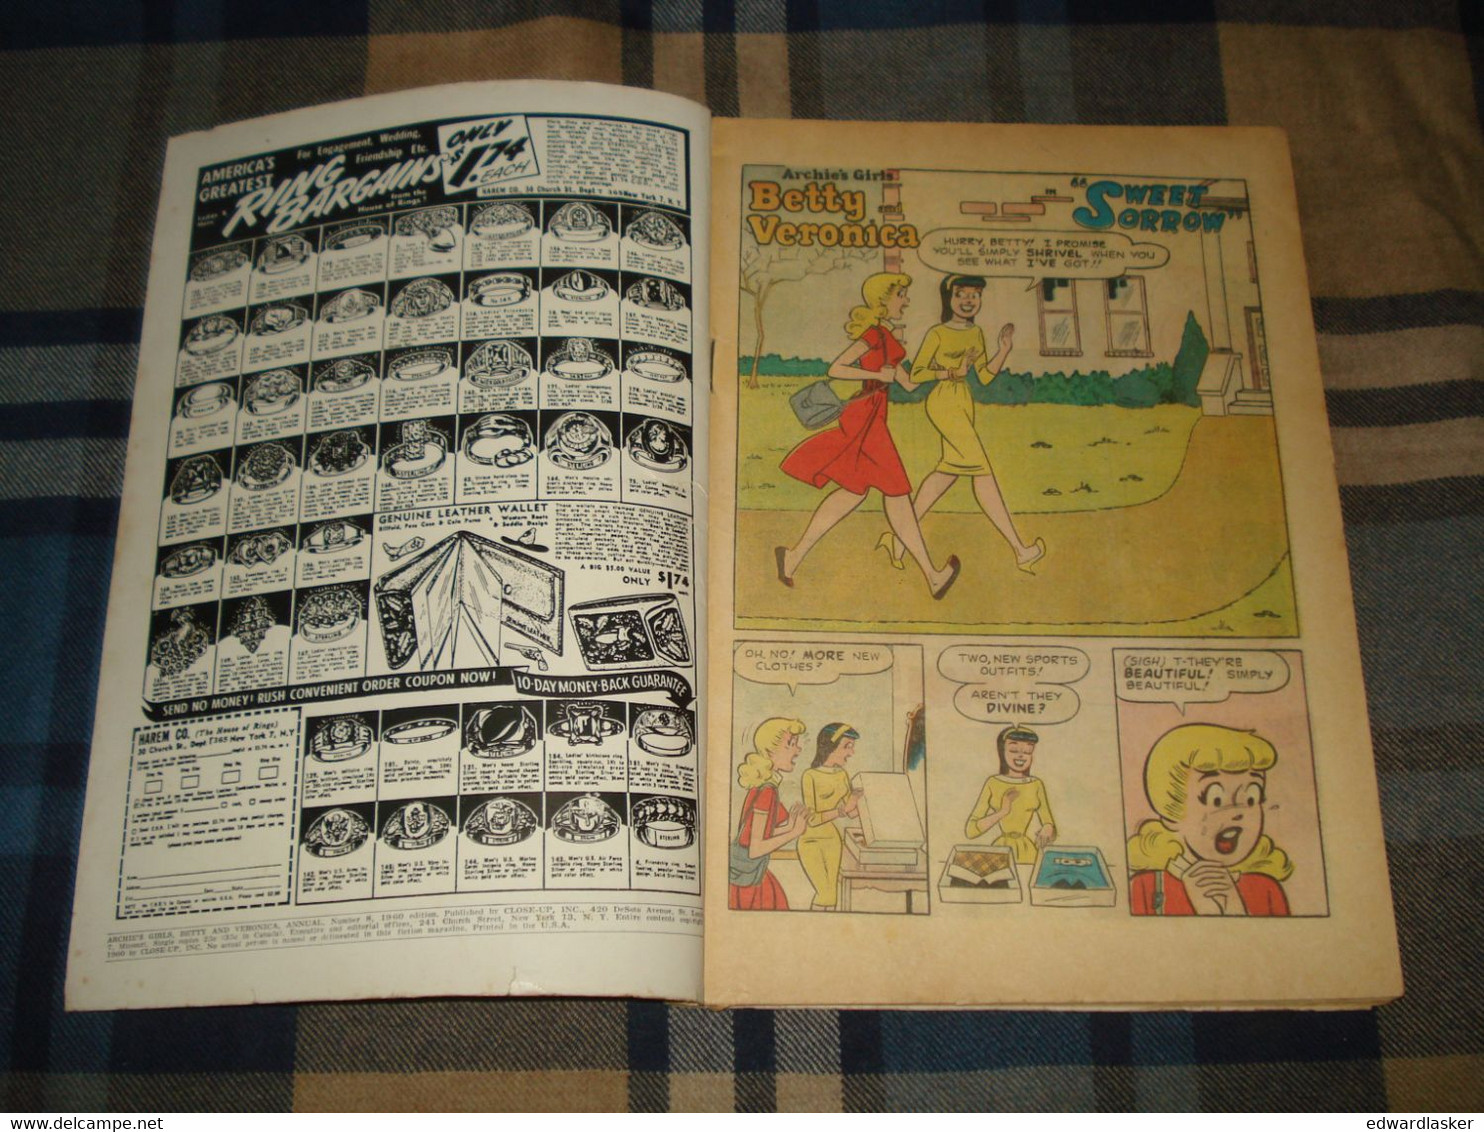 ARCHIE'S GIRLS BETTY & VERONICA Annual N°8 (comics VO) - 1960 - Bon état - Altri Editori